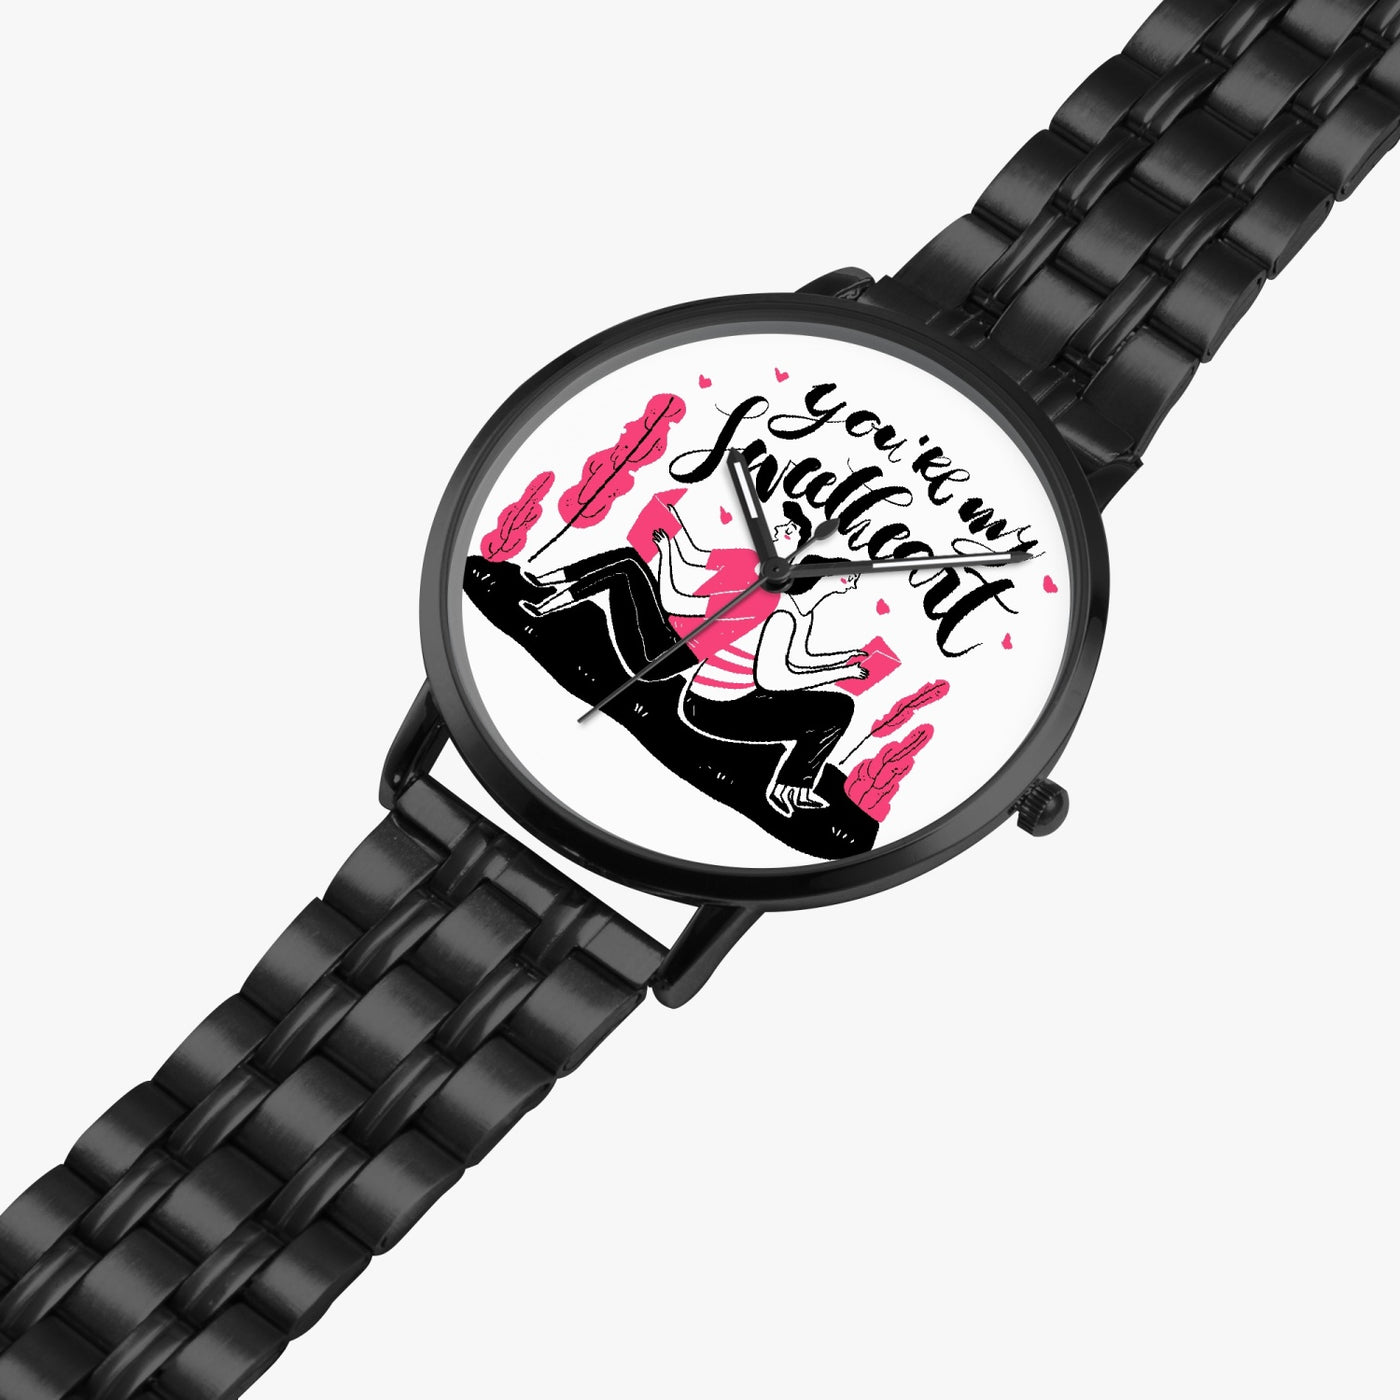 Sweetheart - Instafamous Steel Strap Quartz watch